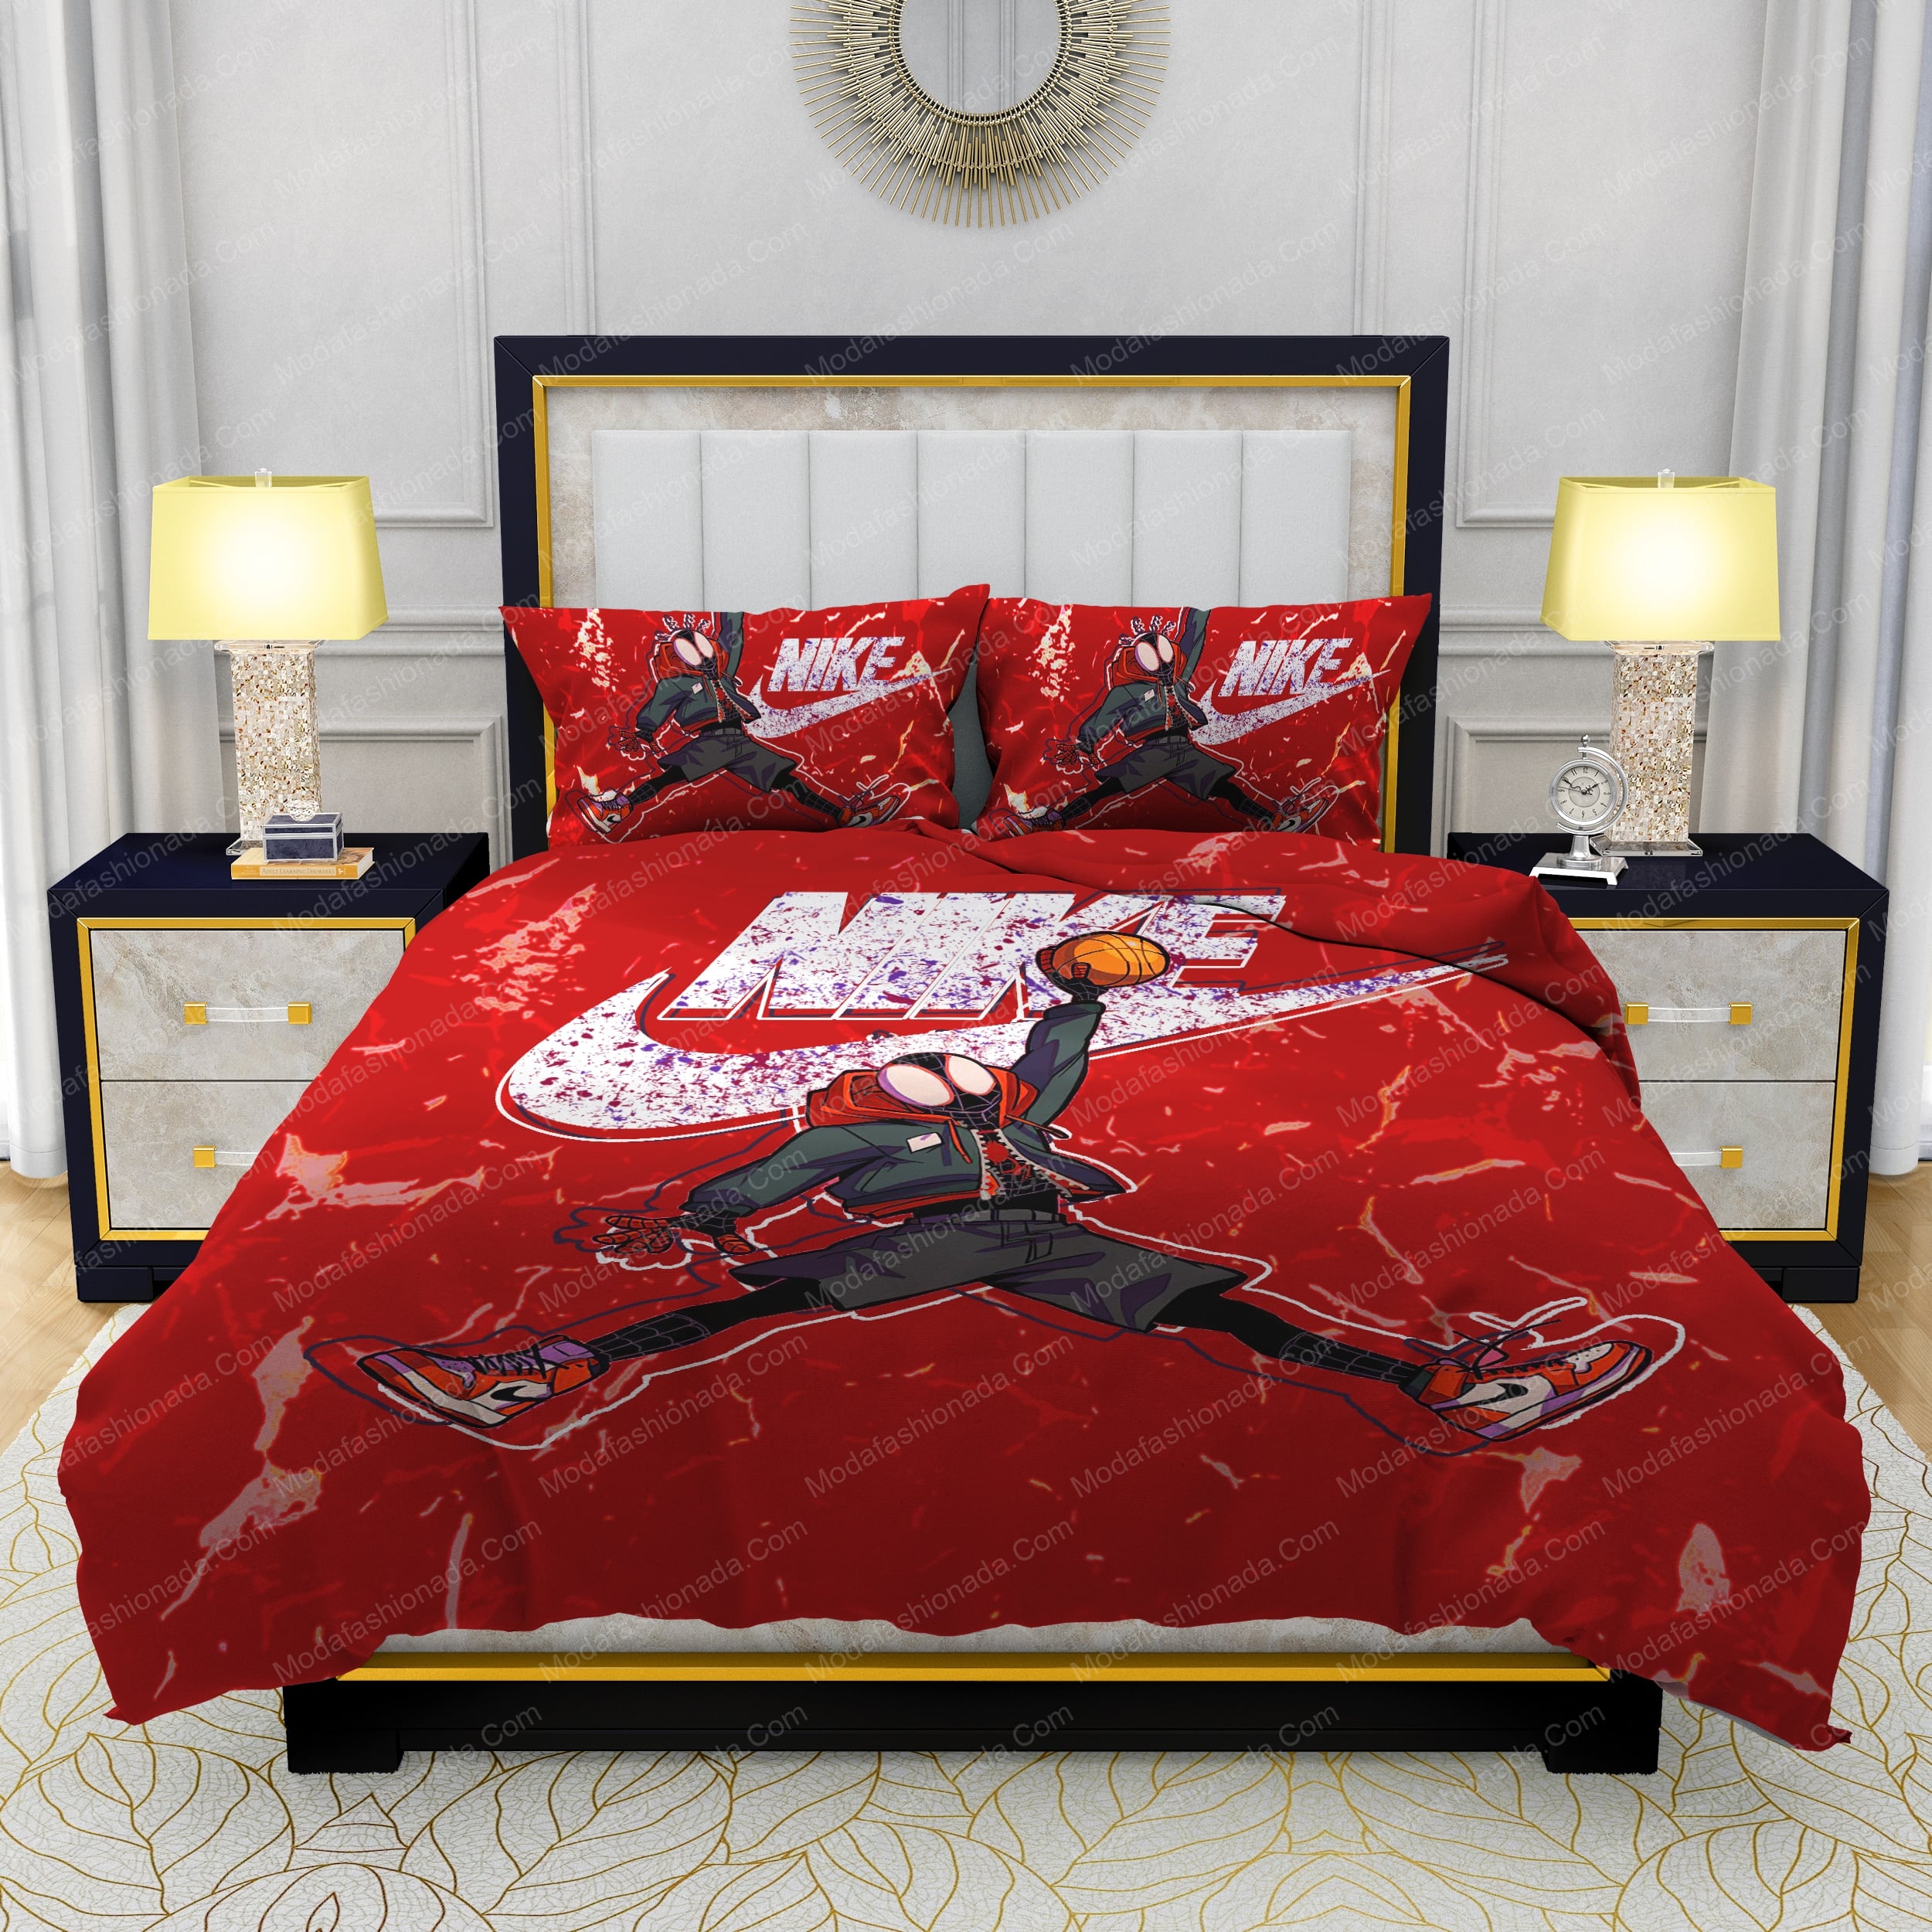 Buy Nike Air Jordan 1 Retro Spiderman Bedding Sets Bed Sets, Bedroom ...